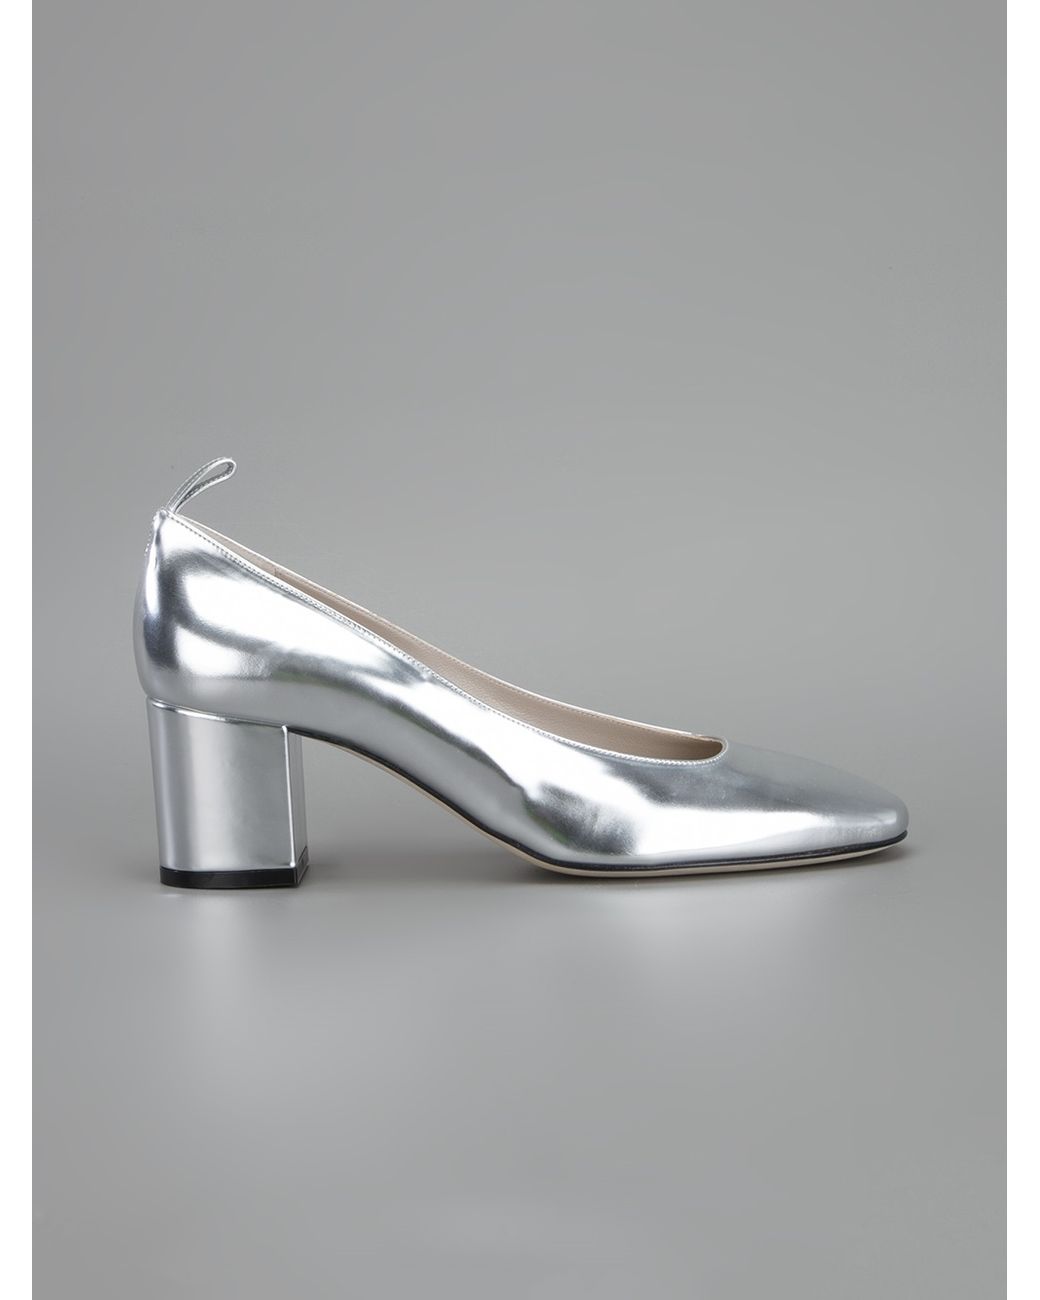 Buy Silver Heeled Shoes for Women by Flat n Heels Online | Ajio.com-bdsngoinhaviet.com.vn